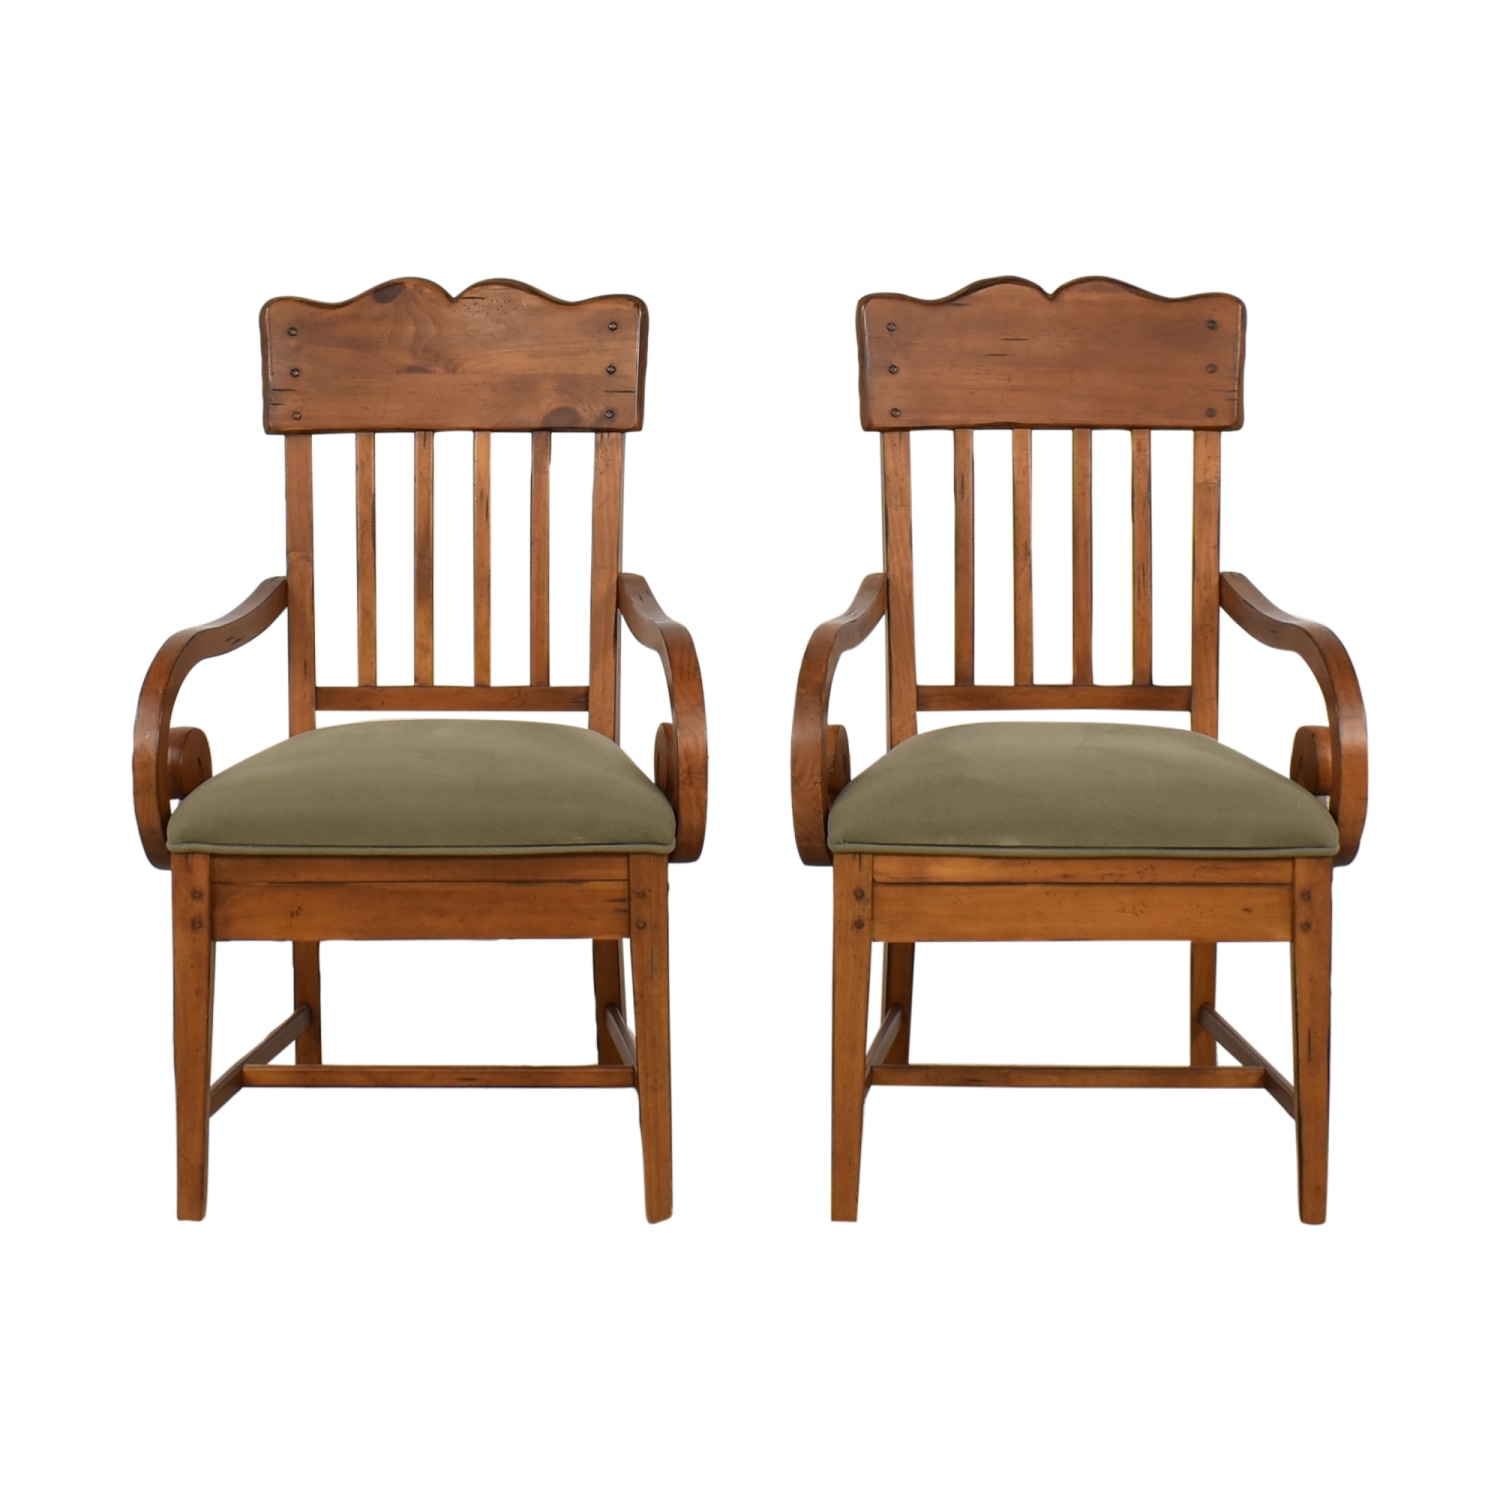 Drexel Heritage  Drexel Heritage Studio Pine Arm Chairs  Chairs